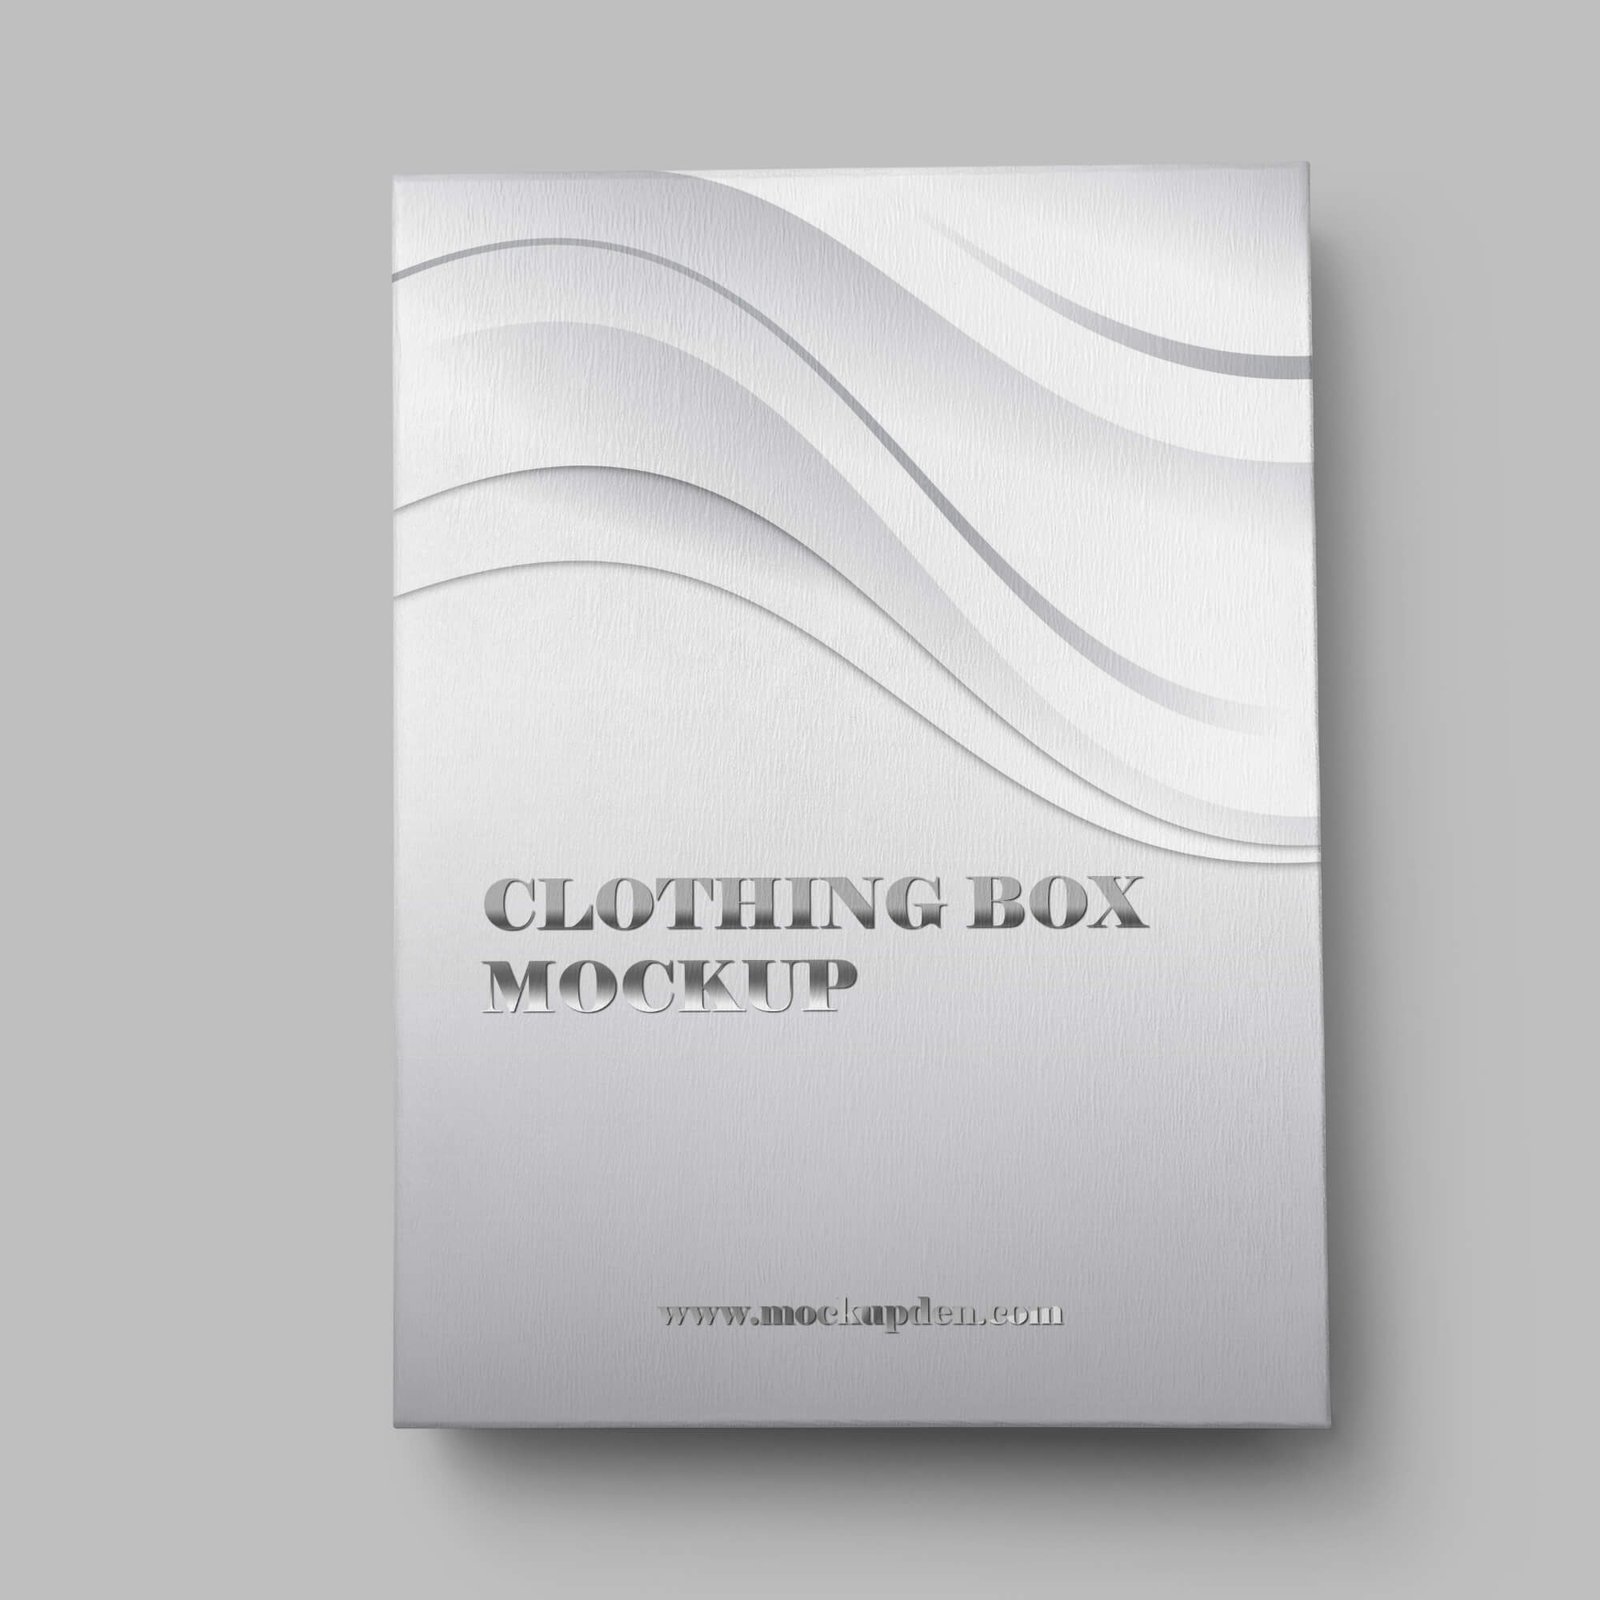 Design Free Clothing Box Mockup PSD Template